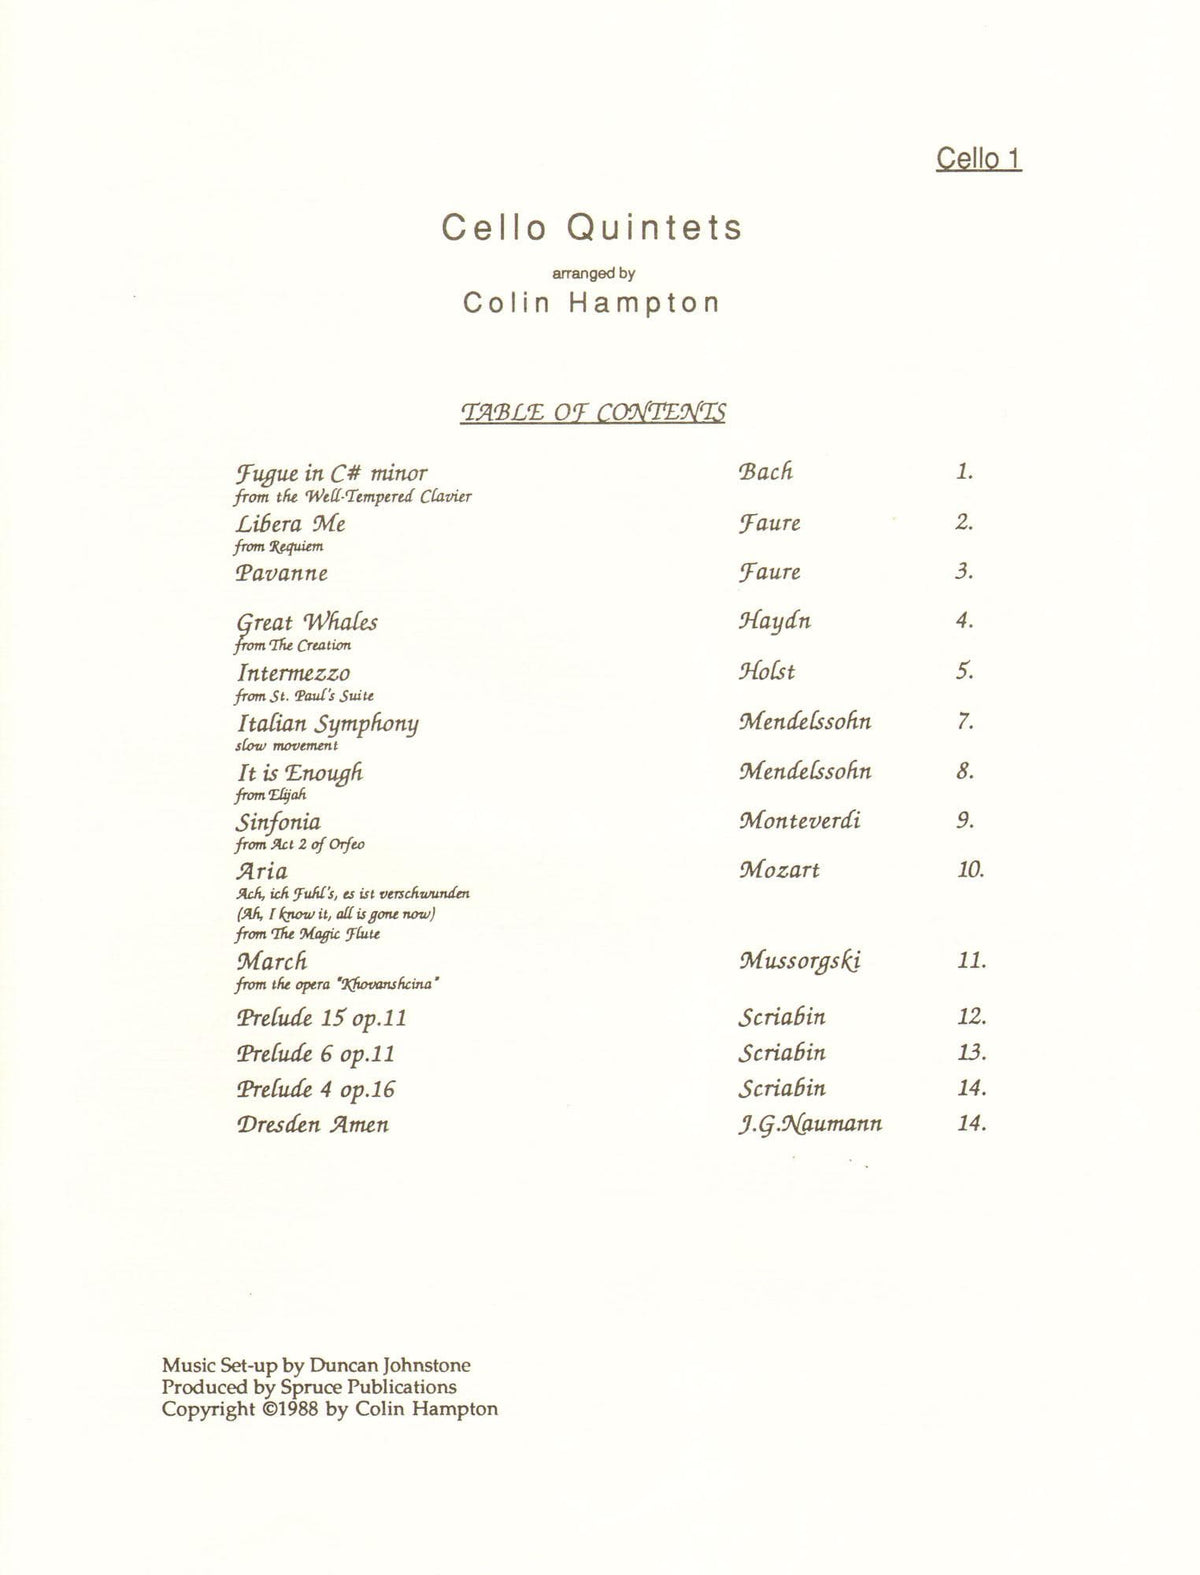 Hampton, Colin - Cello Quintets - Five Cellos - Spruce Publications